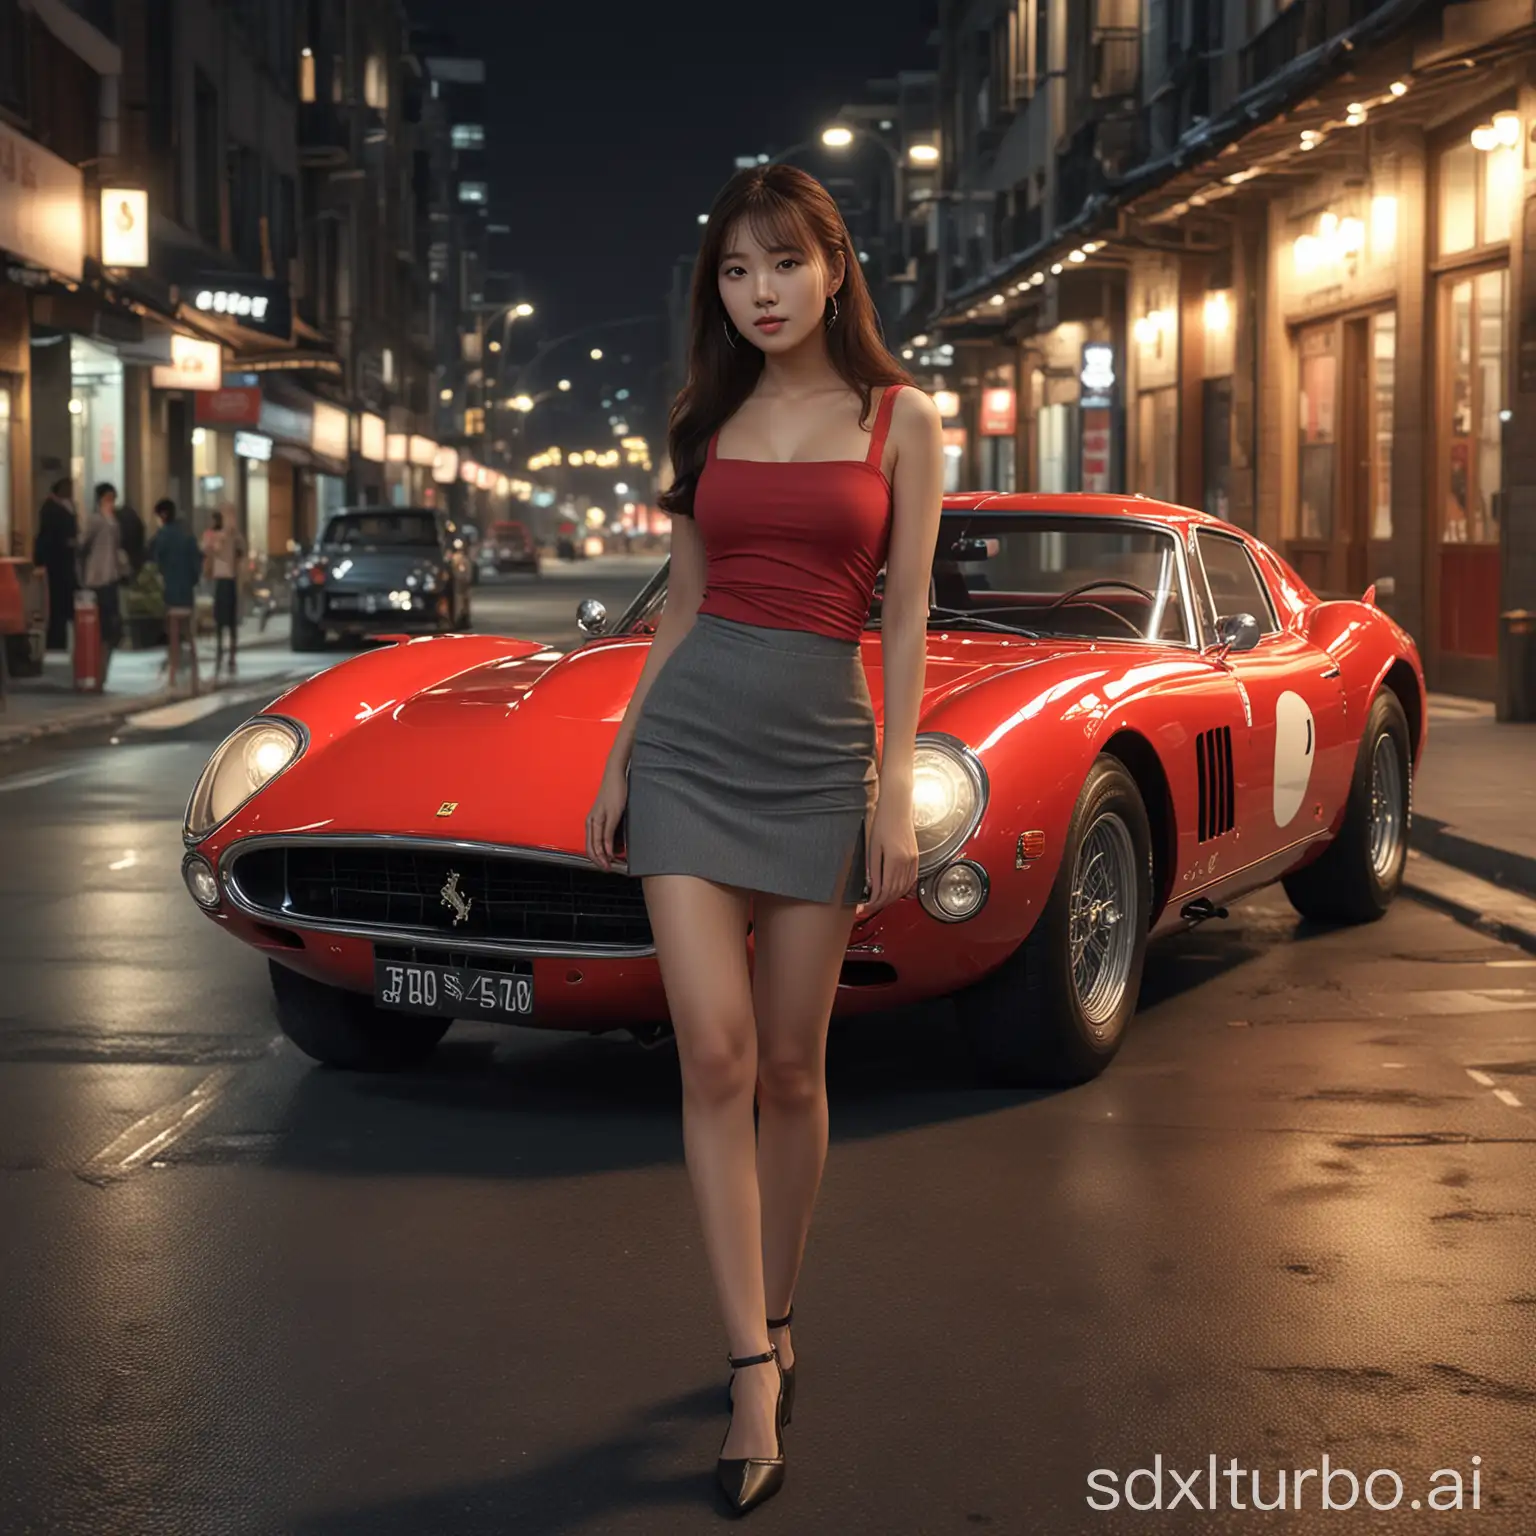 Korean-Girl-Posing-with-Ferrari-250-GTO-at-Night-in-Seoul